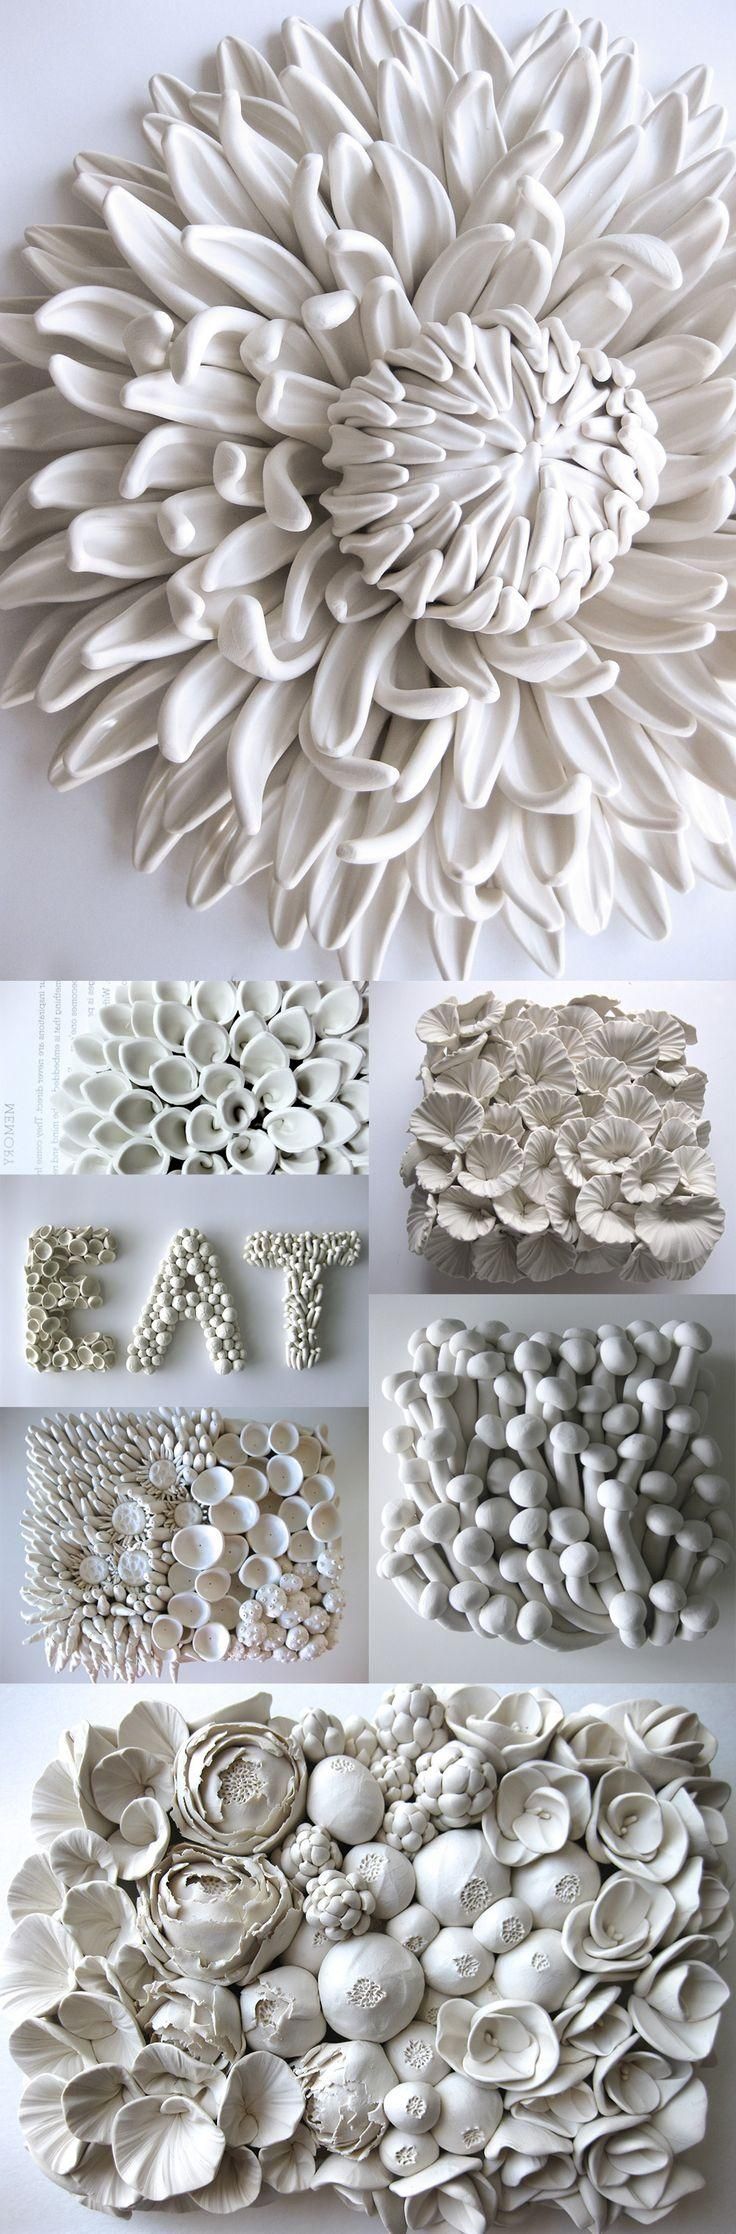 Best 25+ Ceramic Flowers Ideas On Pinterest | Clay Flowers, Clay Regarding Ceramic Flower Wall Art (View 4 of 20)